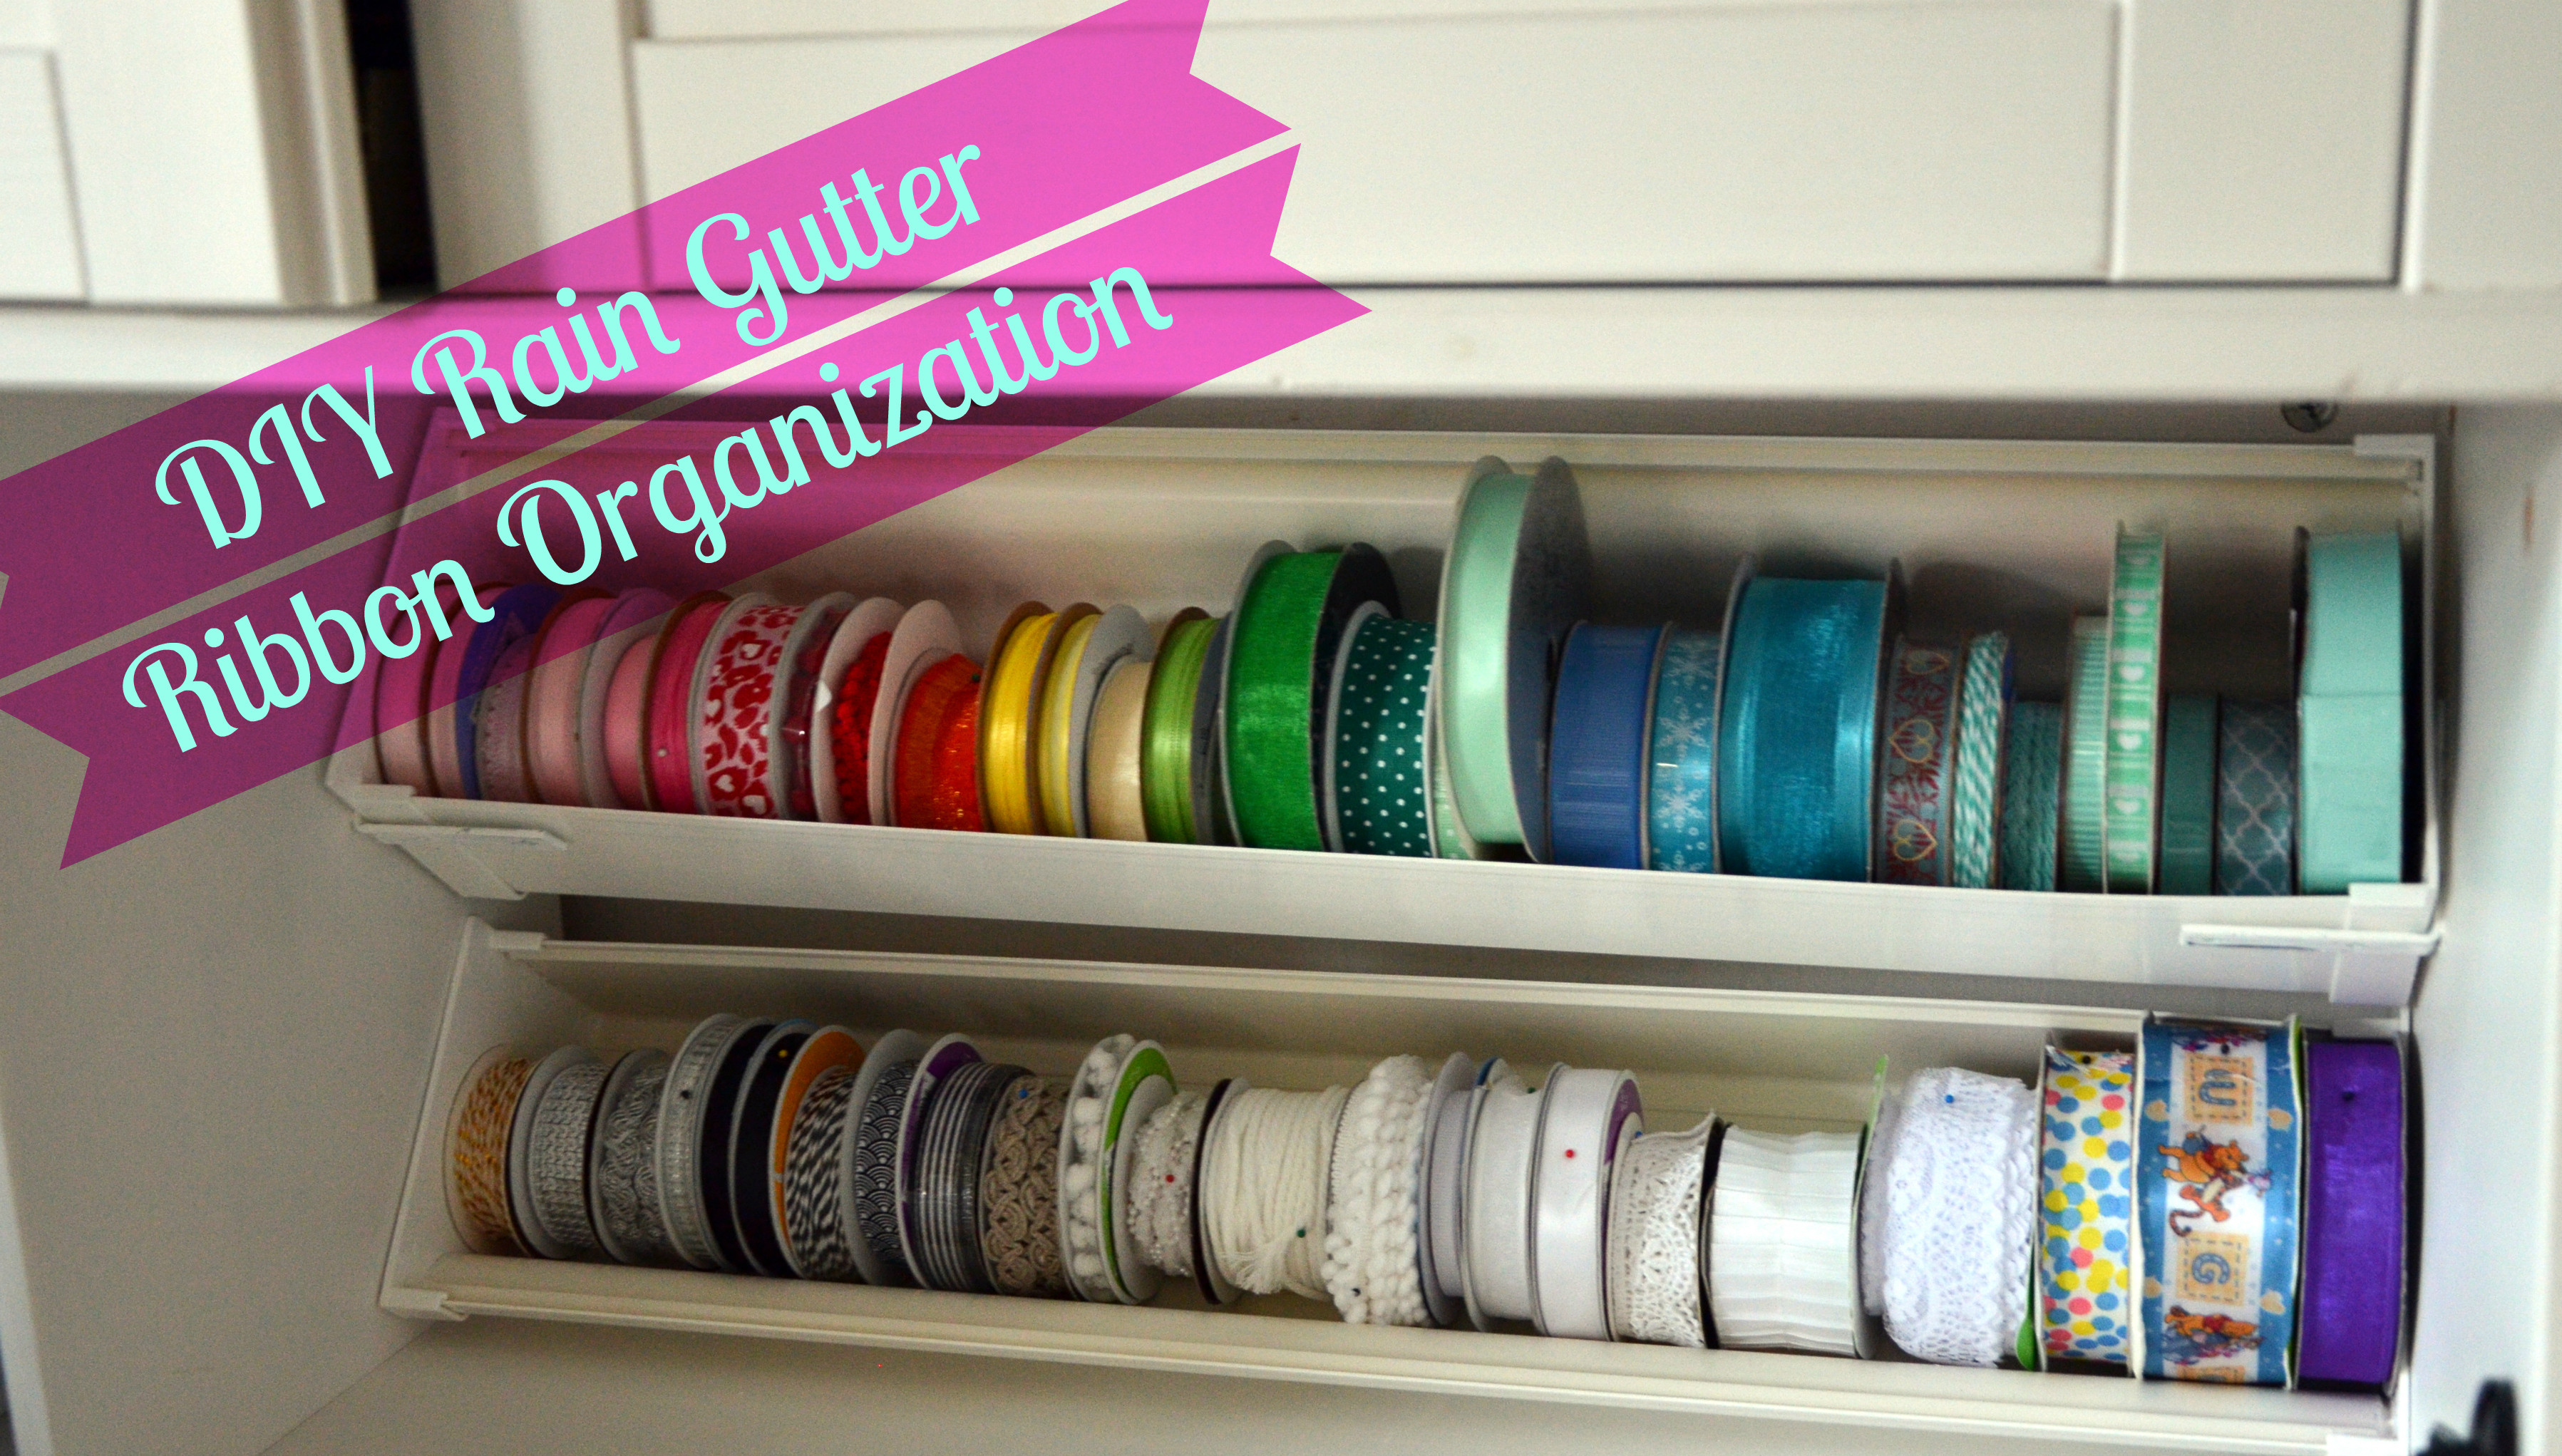 Best ideas about DIY Ribbon Organizer
. Save or Pin DIY Rain Gutter Ribbon Organization Now.